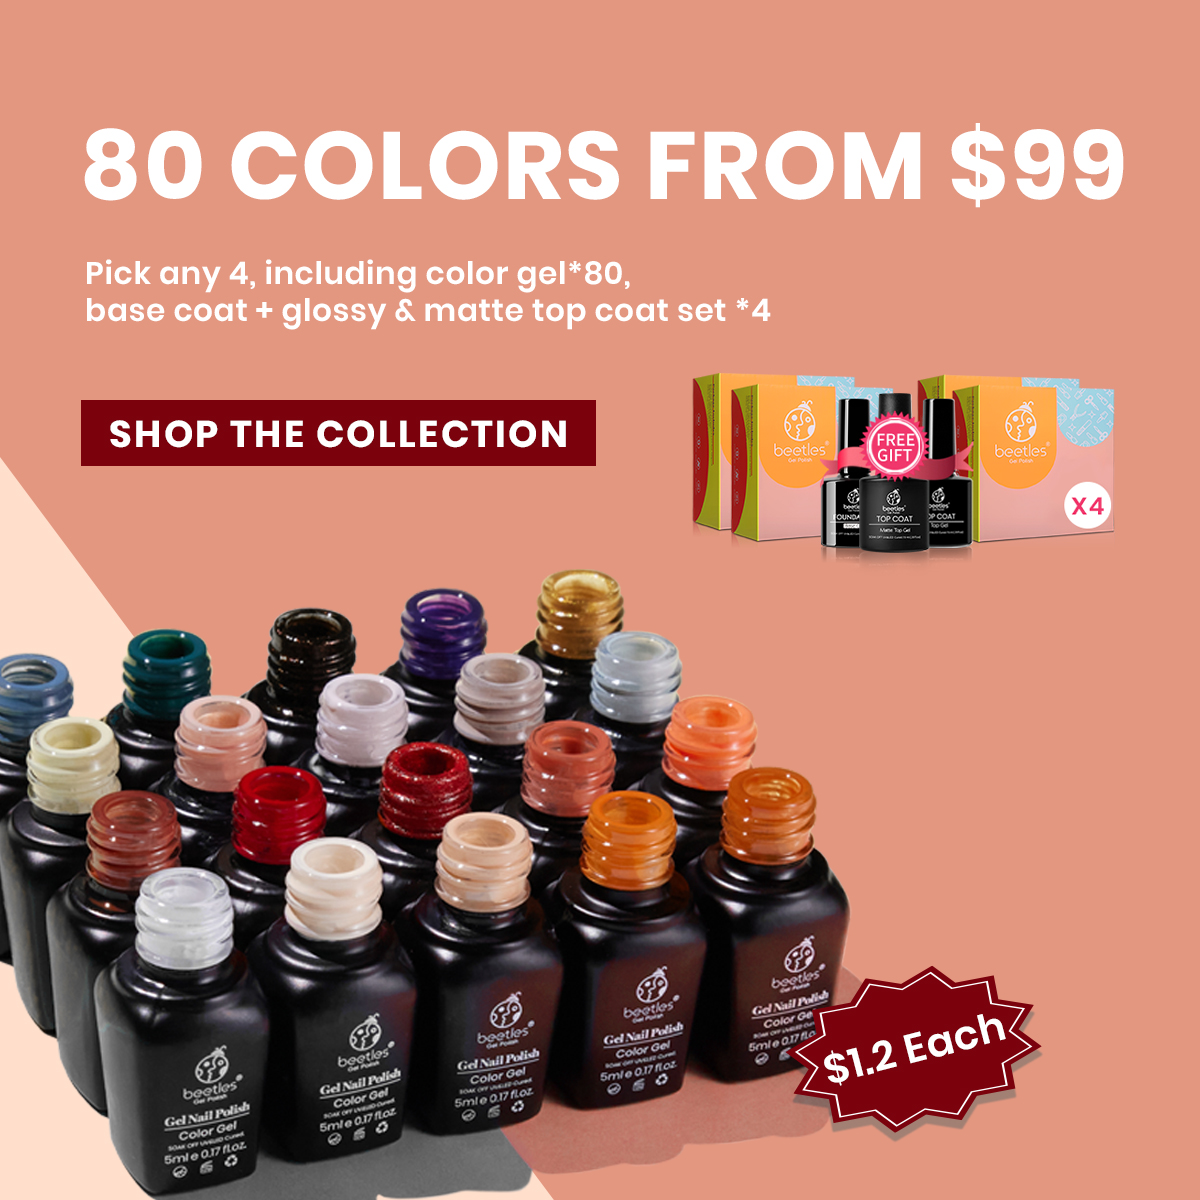 Bulk Savings For Pros - 80 colors starting at $99!